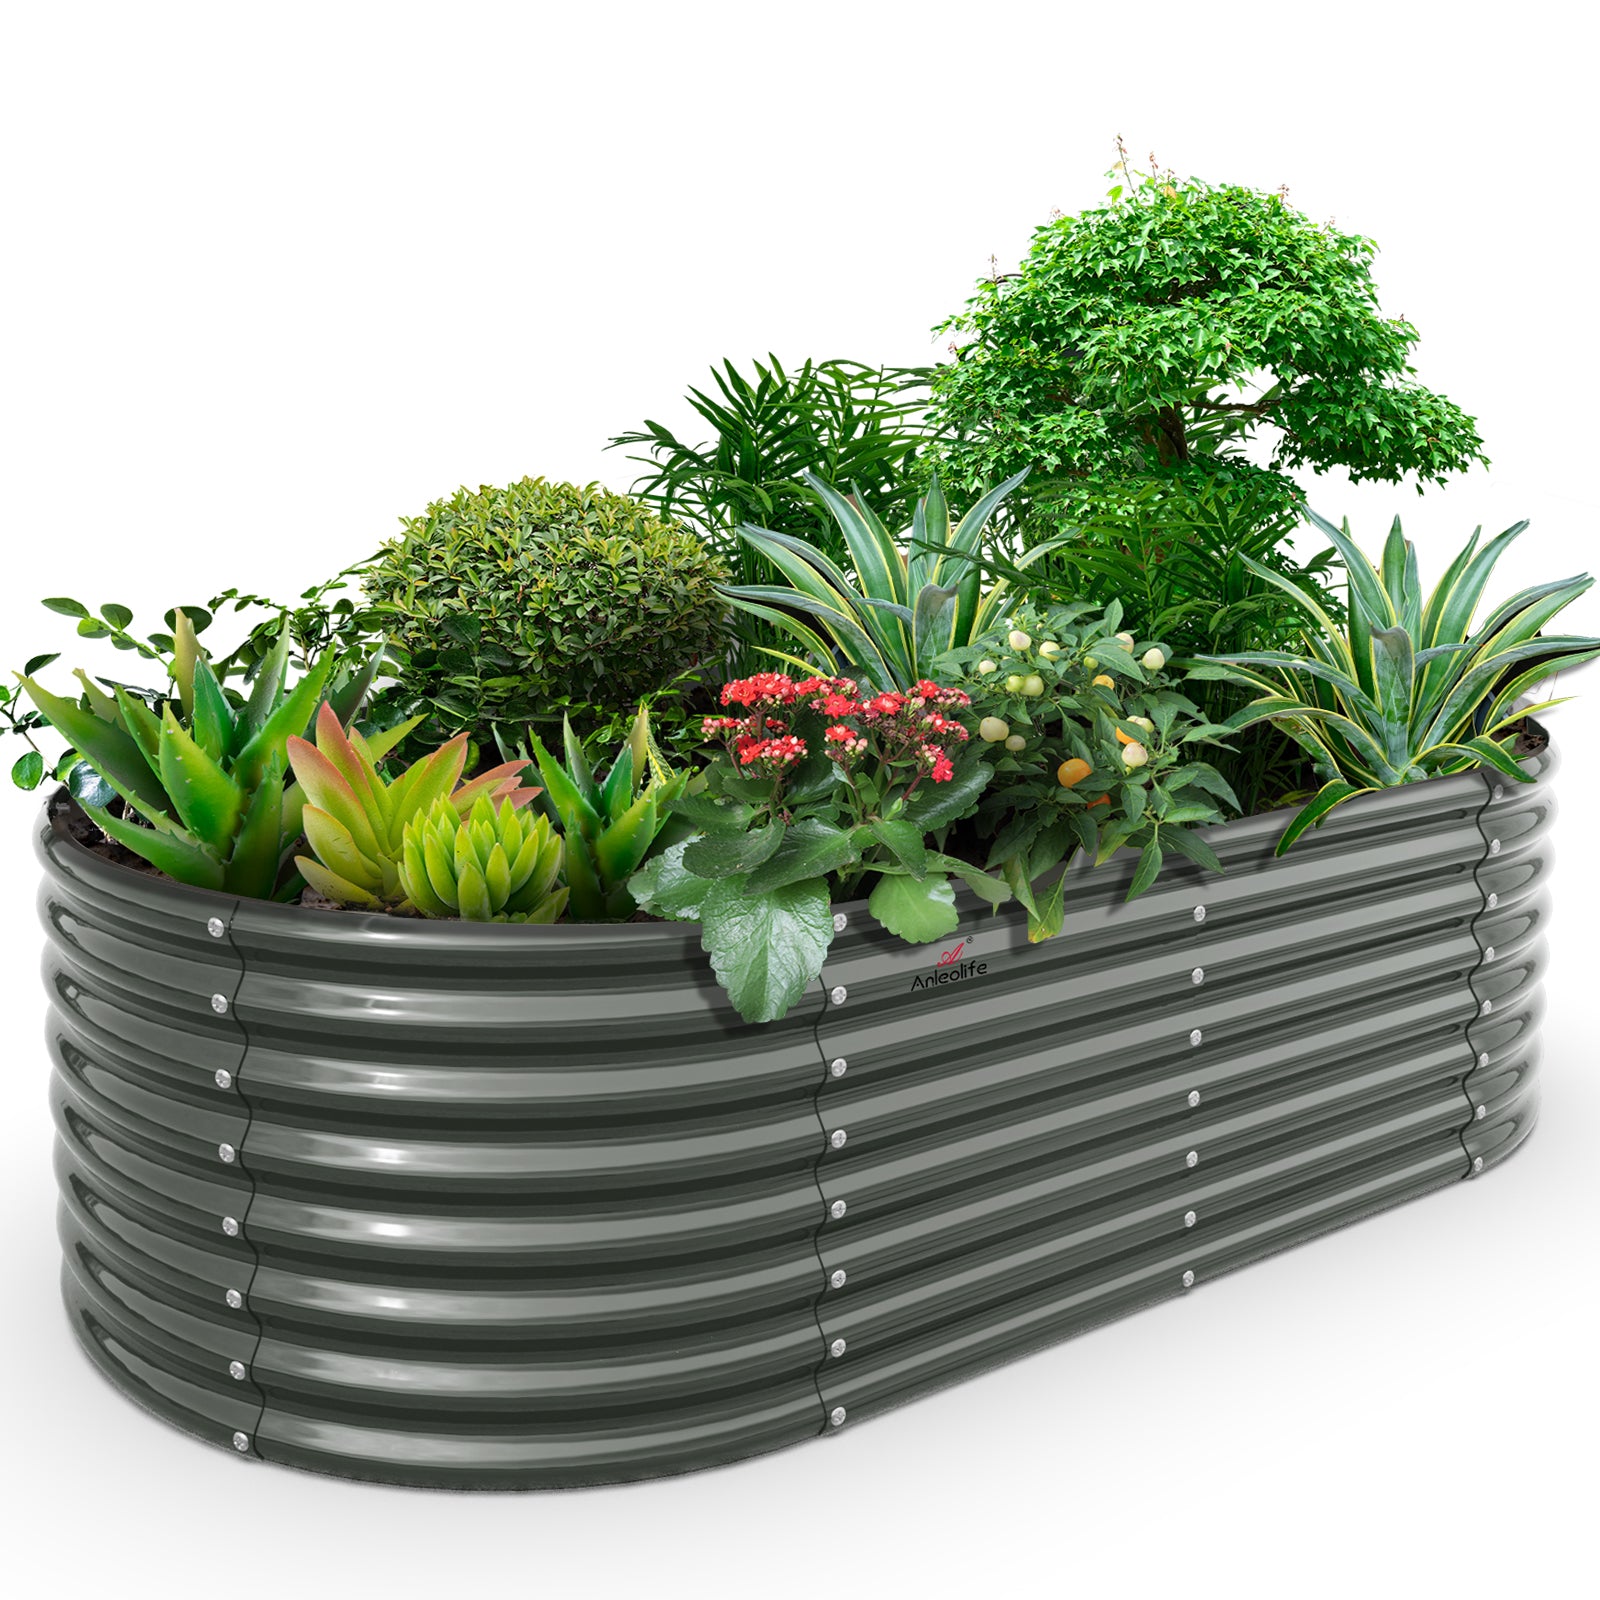 Set of 12: 8x4x2ft Oval Modular Metal Raised Garden Beds (Grey)